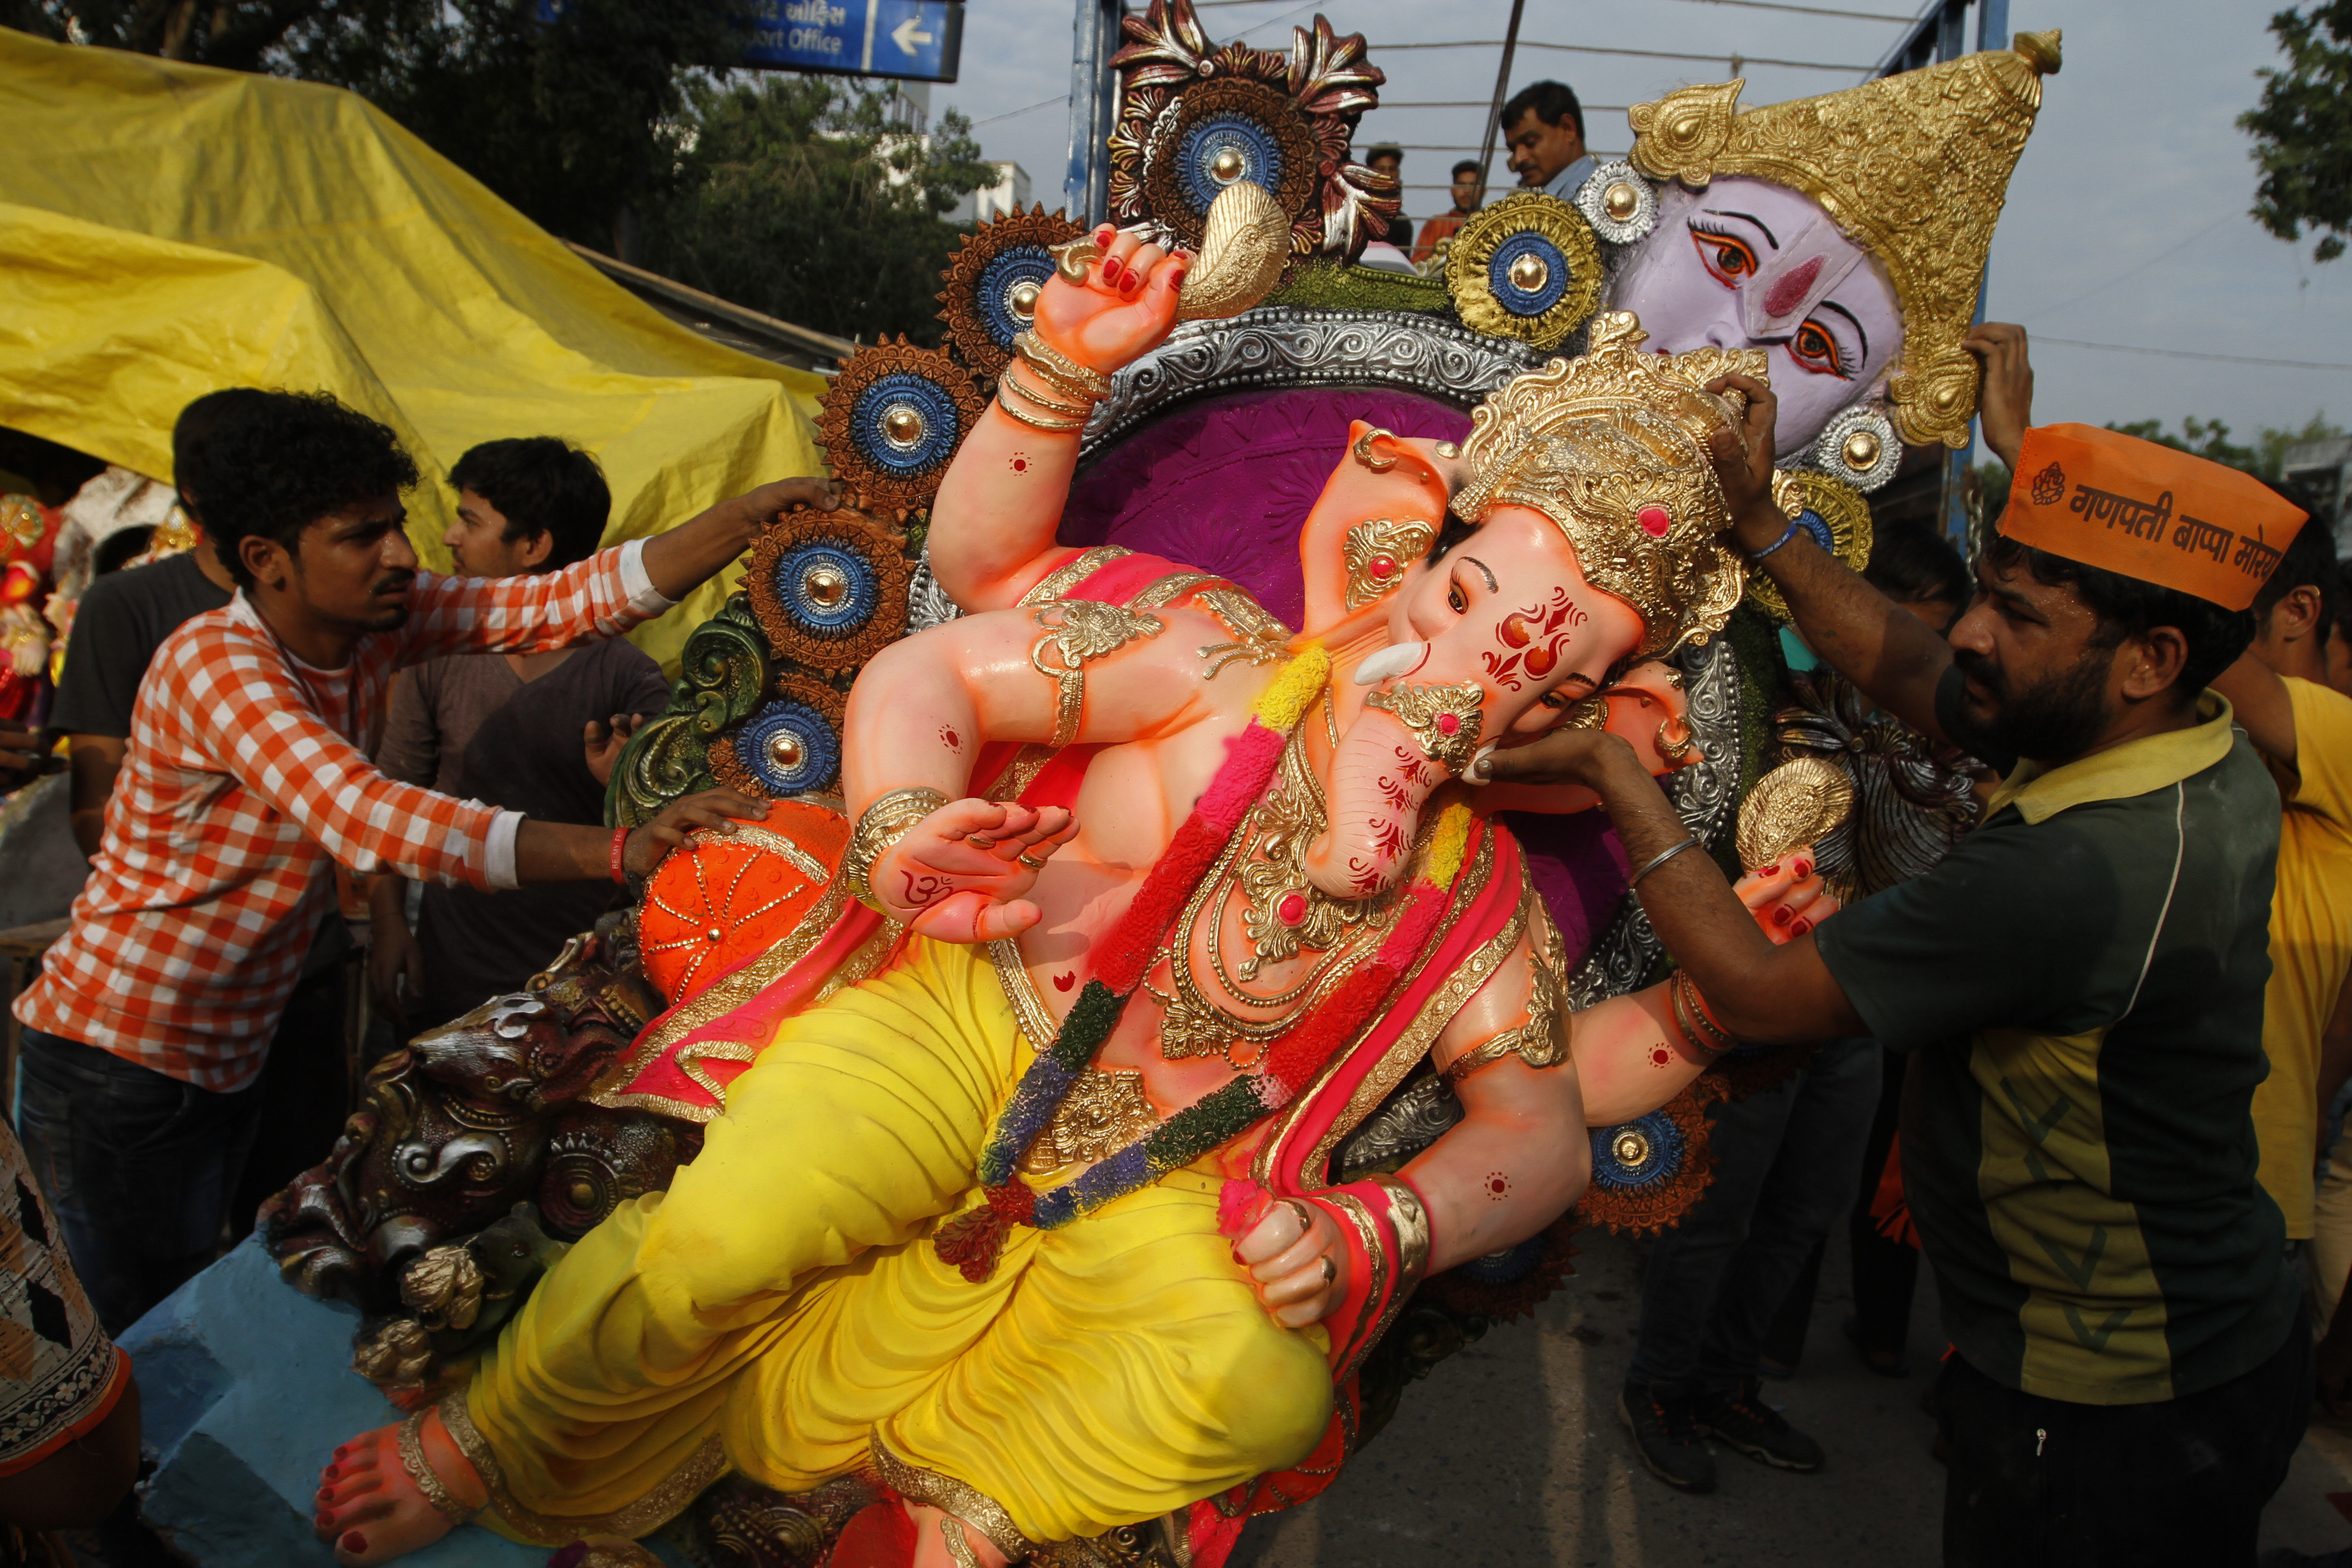 Devotees load an idol of elephant-headed Hindu God Ganesha on a vehicle on the eve of Ganesh Chaturthi festival in Ahmadabad - AP